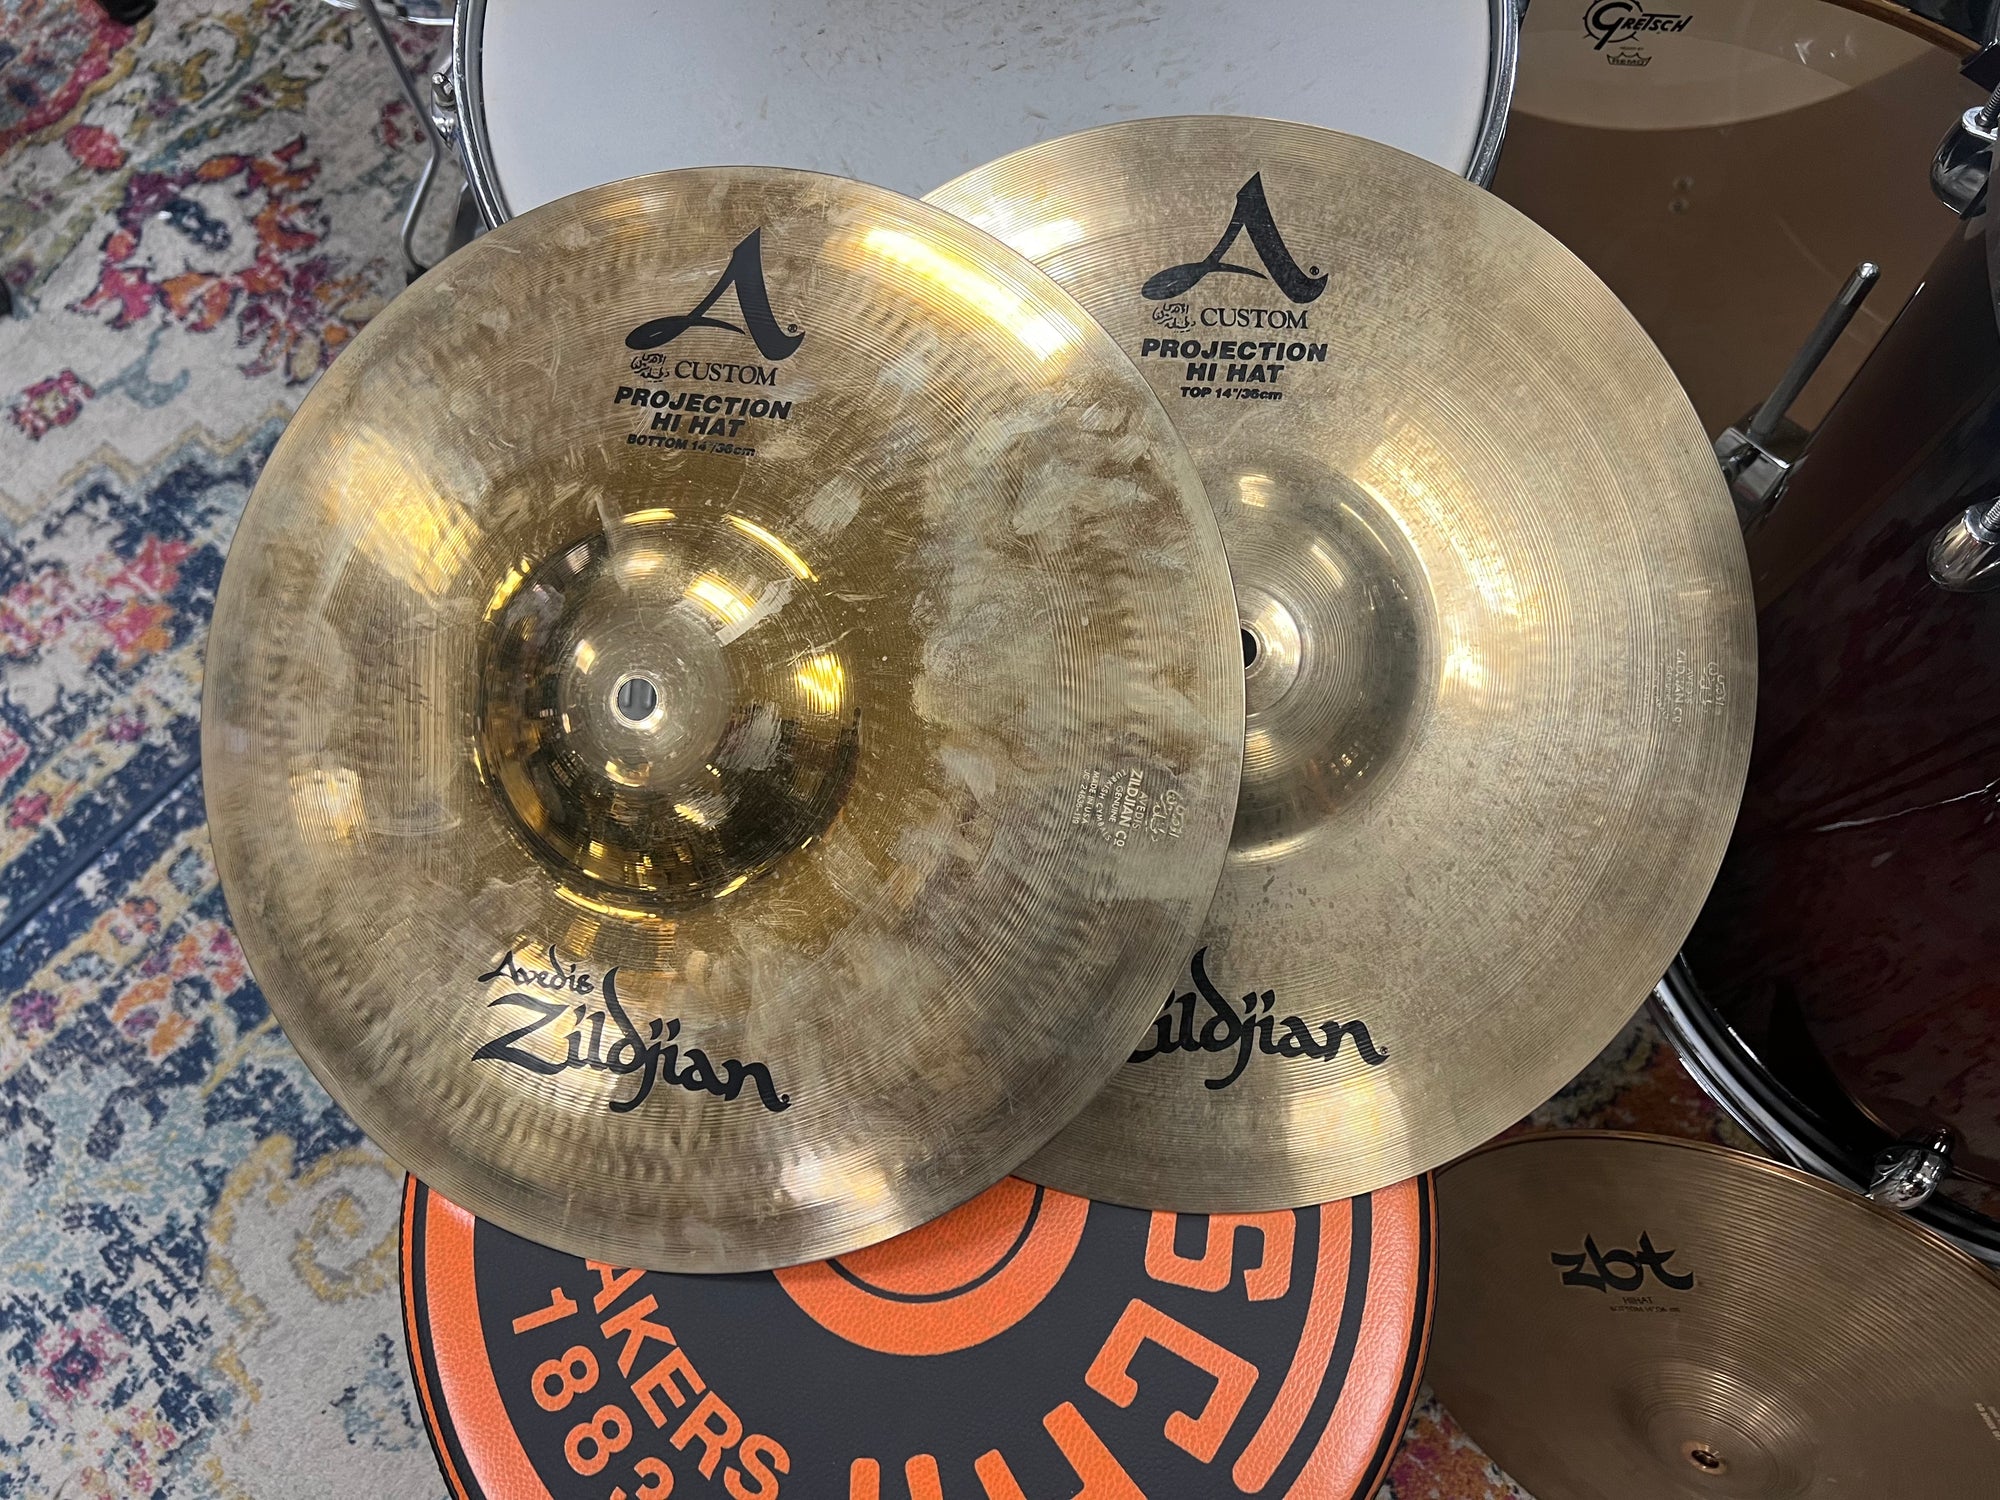 Zildjian 14” A Custom projection hi hat Cymbals